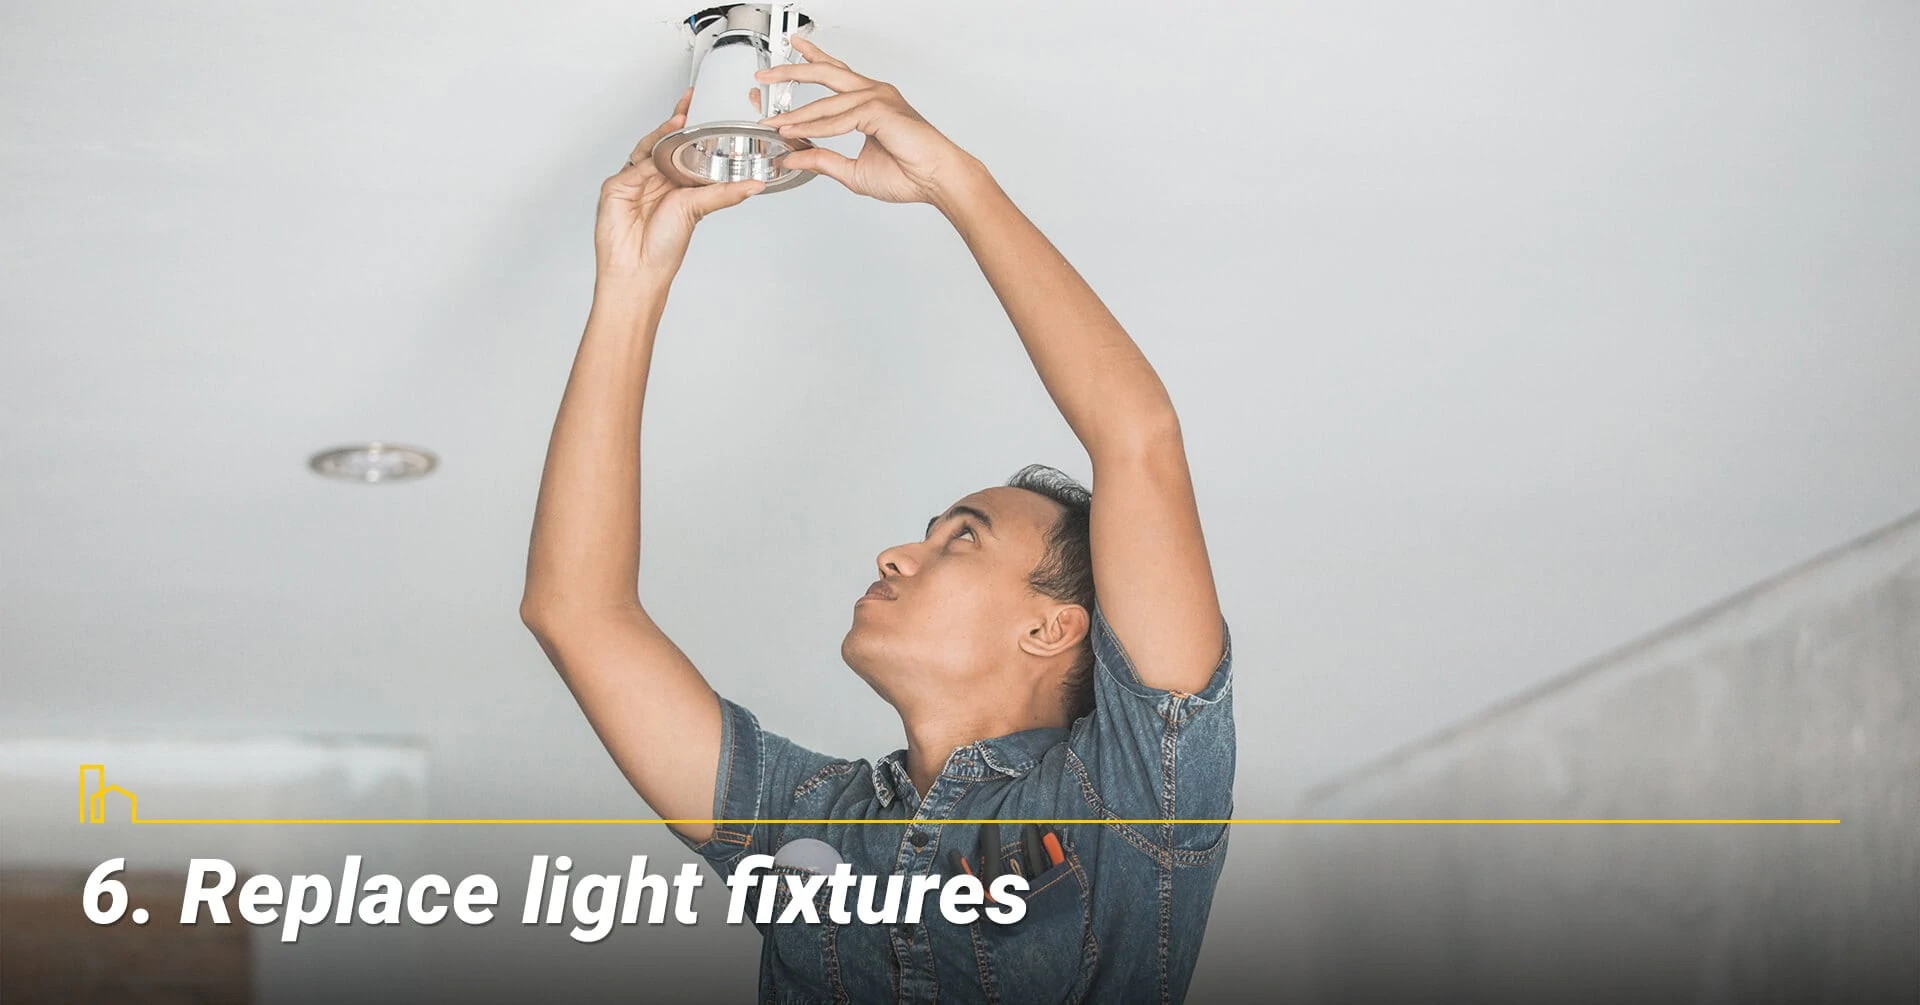 Replace light fixtures, upgrade lighting fixtures